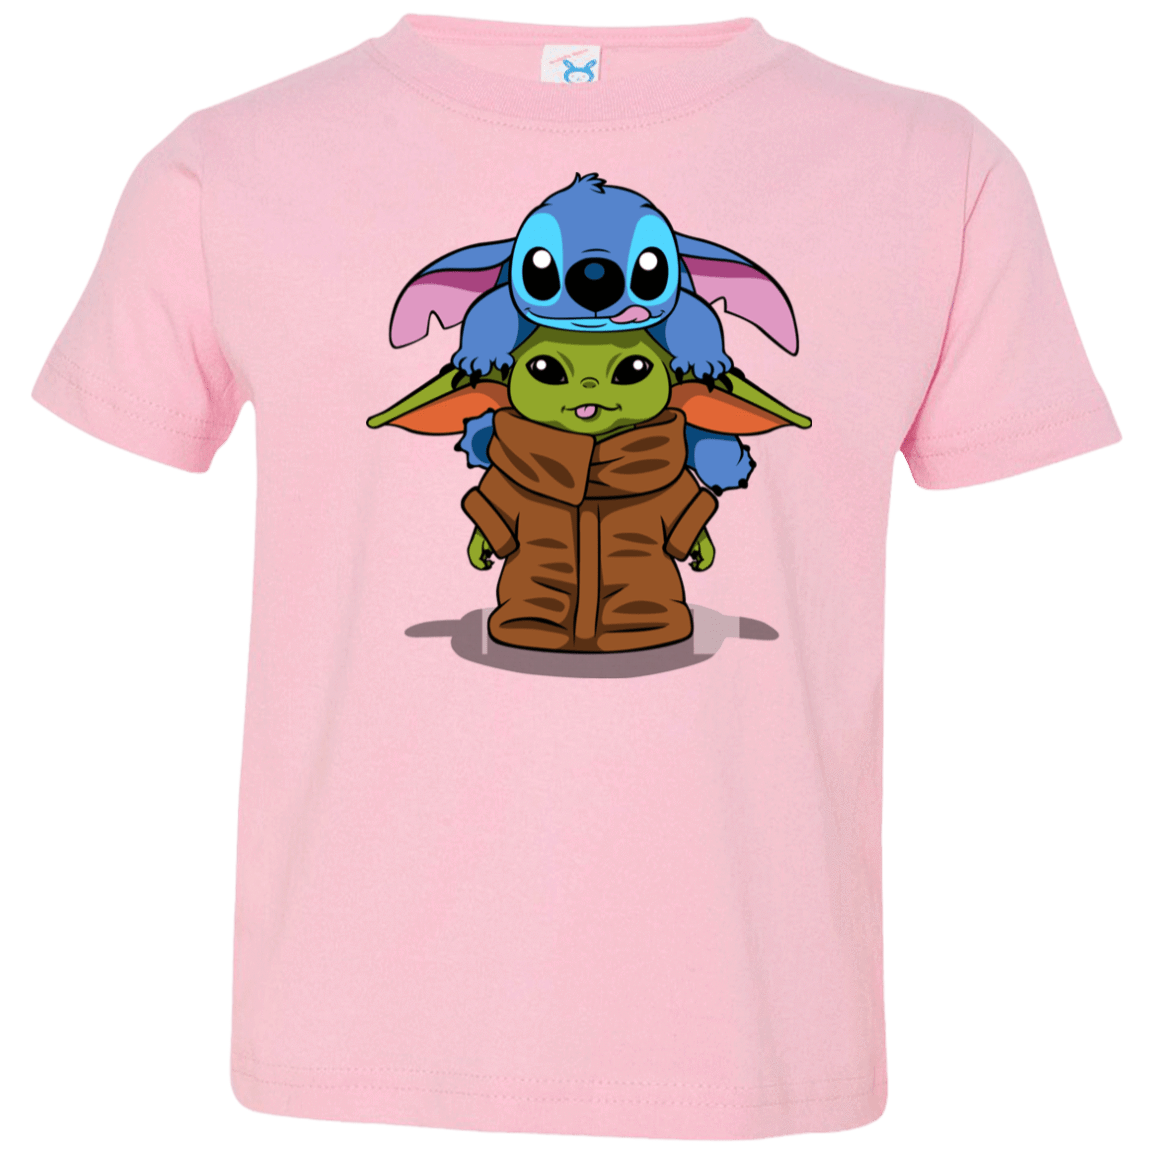 T-Shirts Pink / 2T Stitch Yoda Toddler Premium T-Shirt